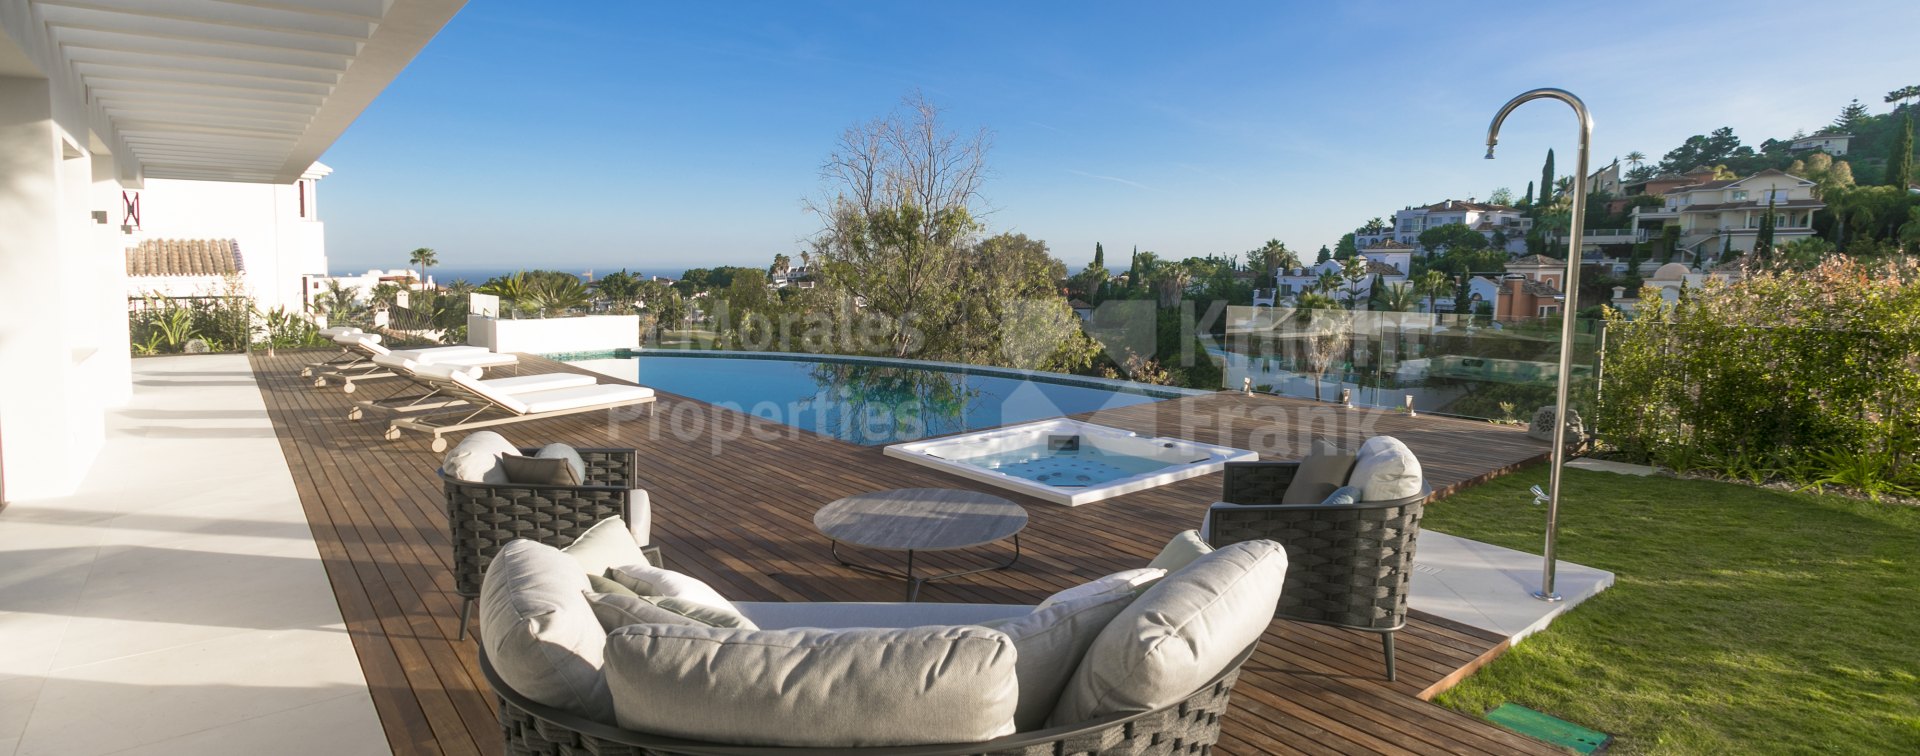 Villa in La Quinta mit Panoramablick